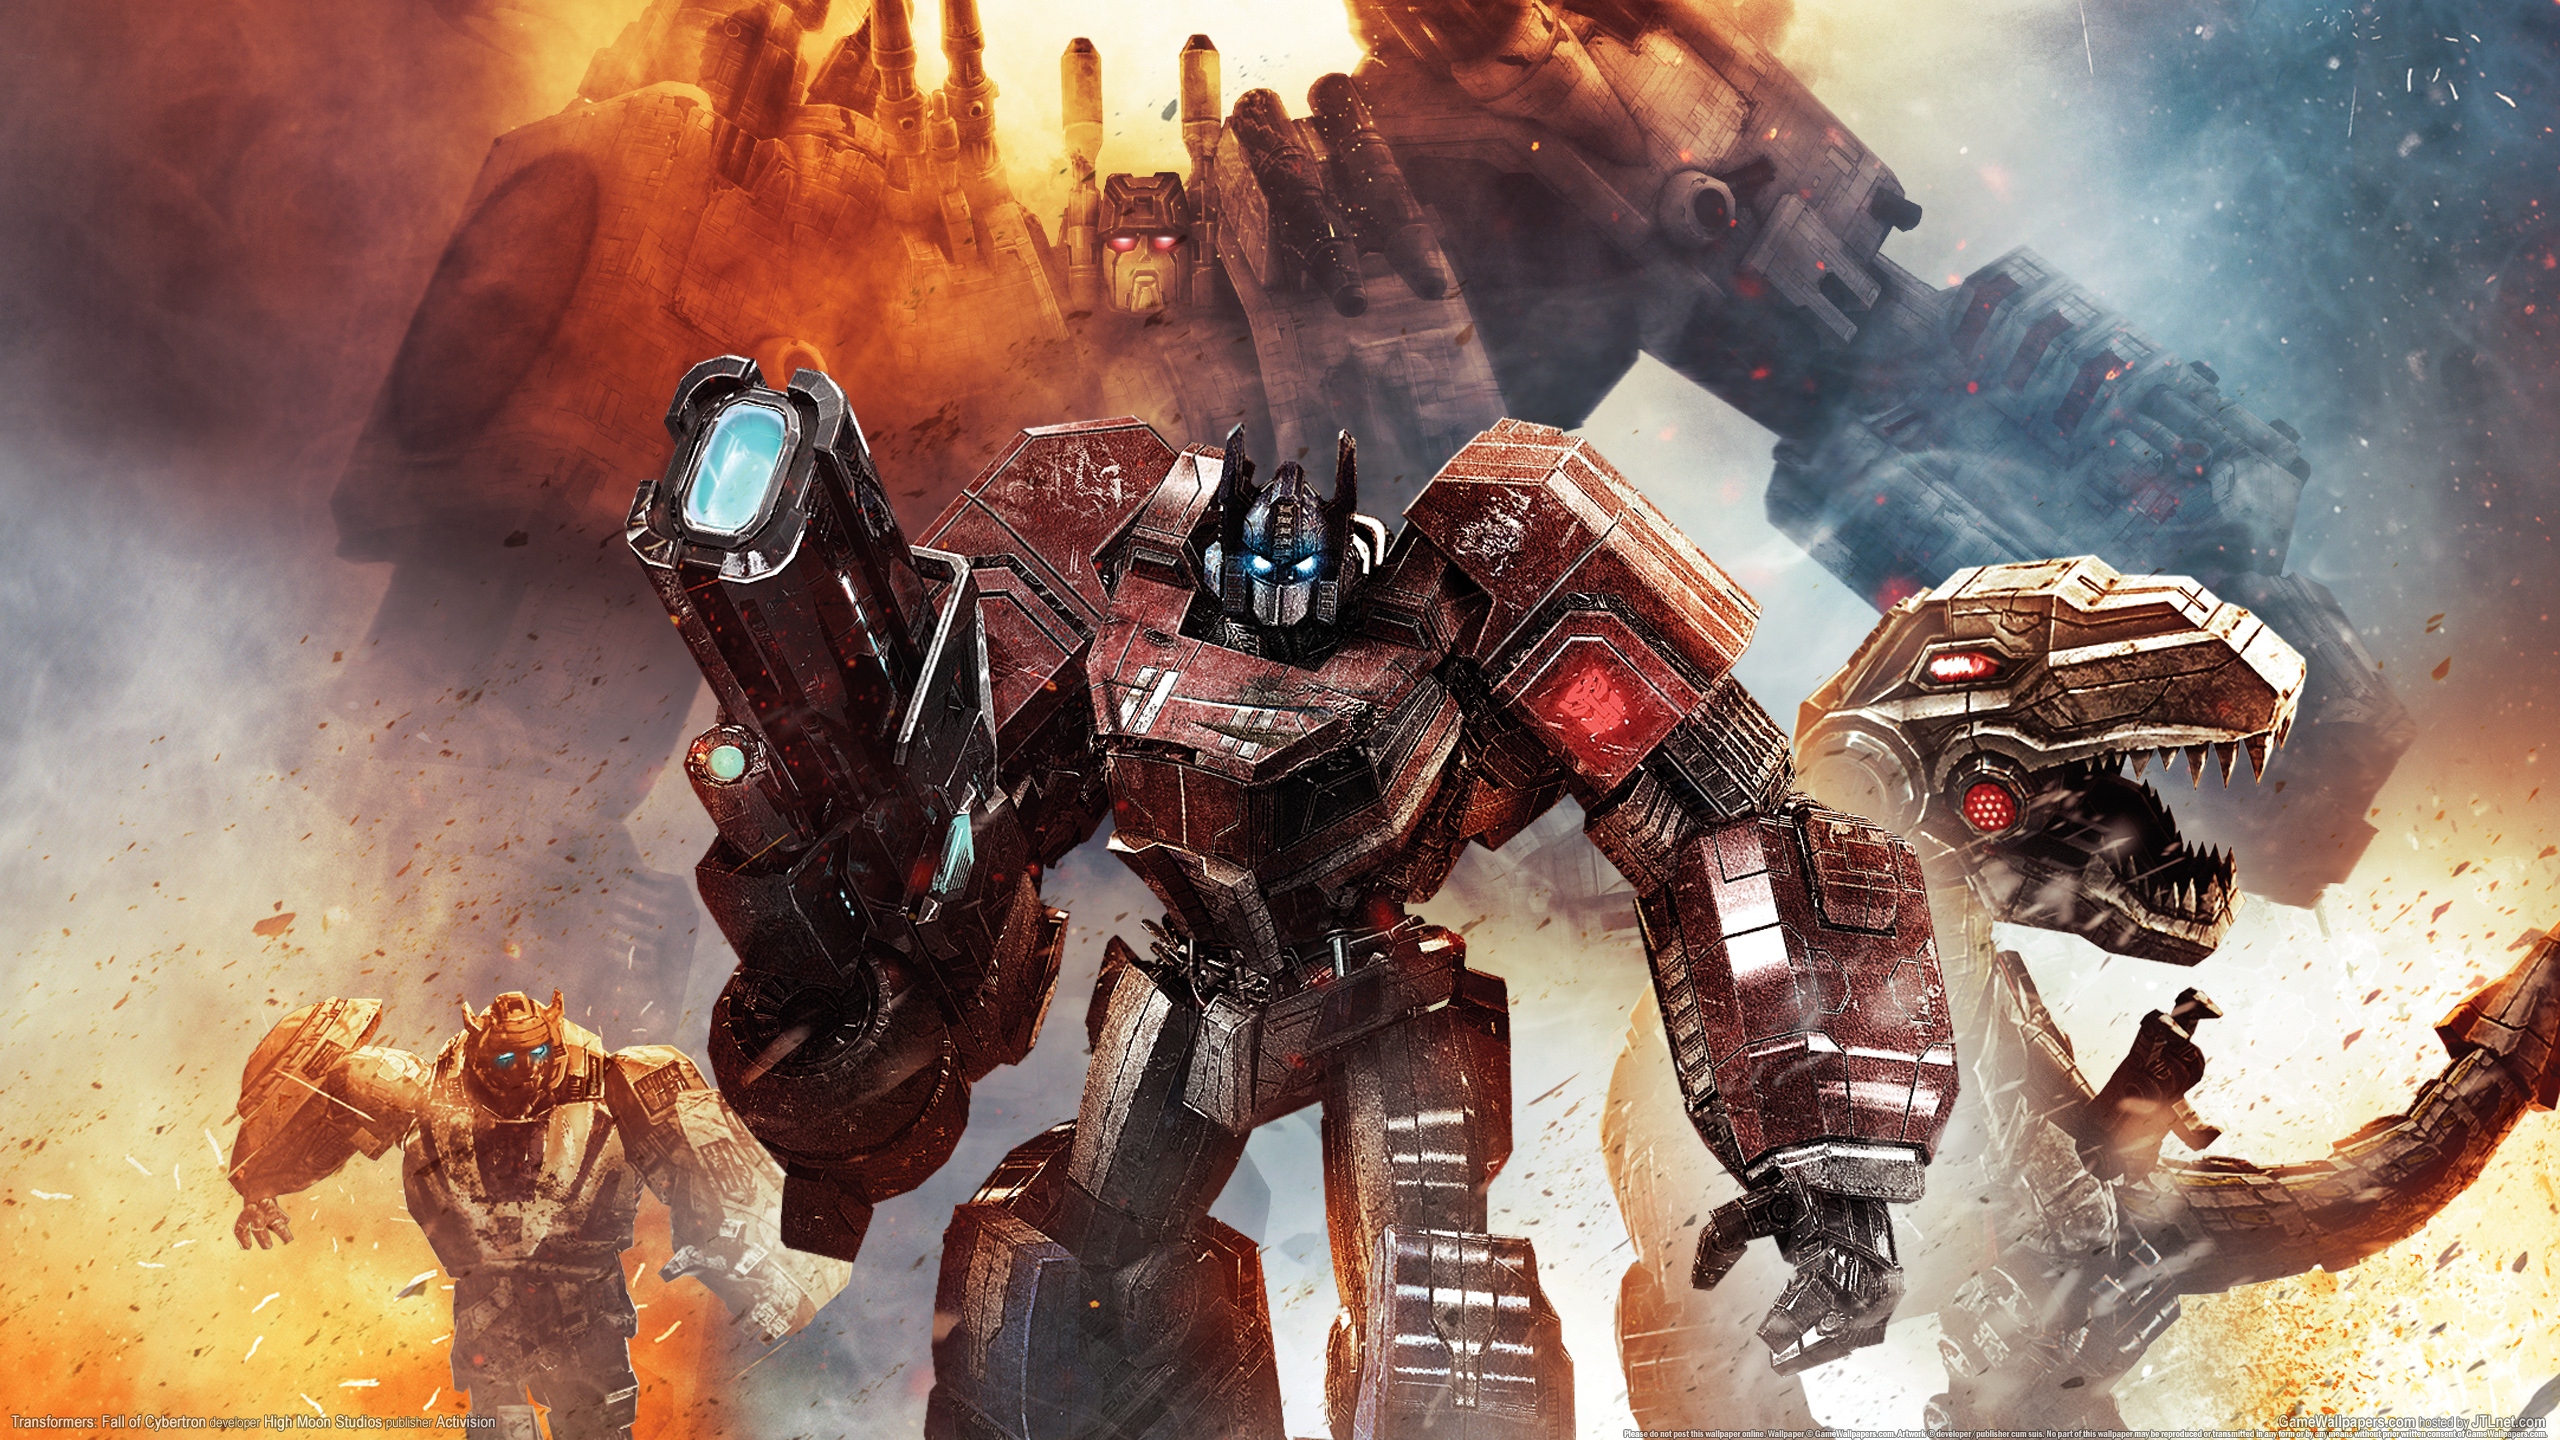 Transformers Cybertron Wallpaper Picture